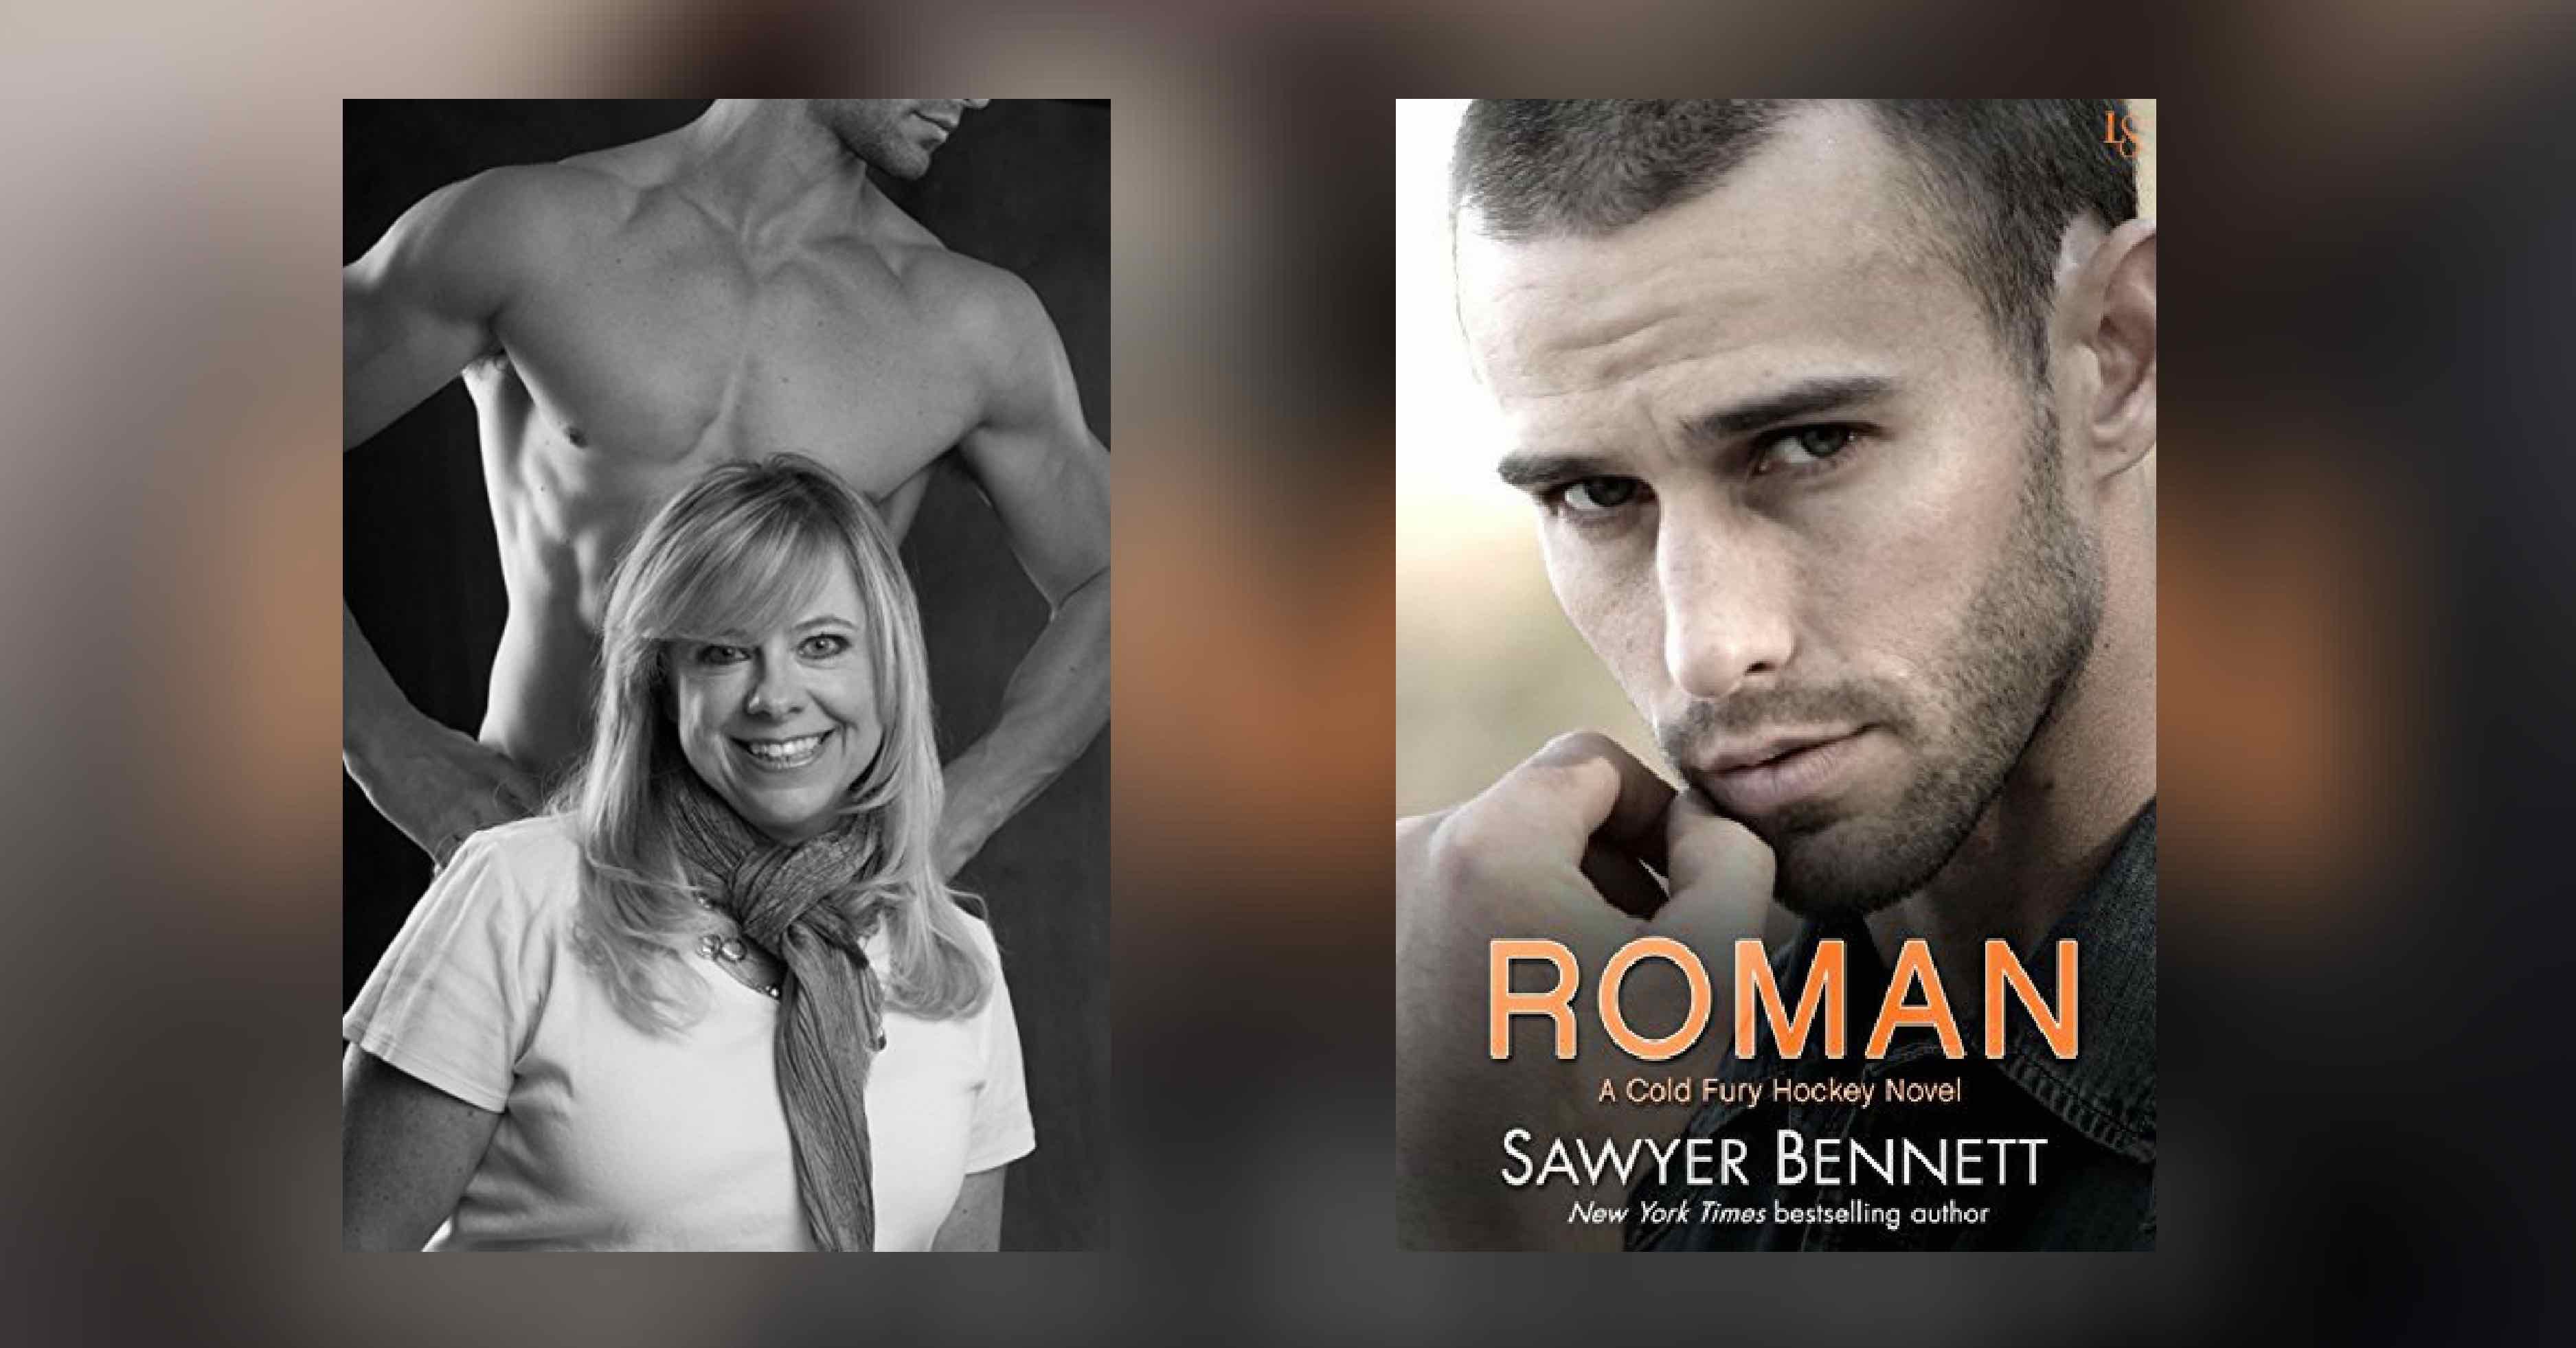 Interview with Sawyer Bennett, author of Roman